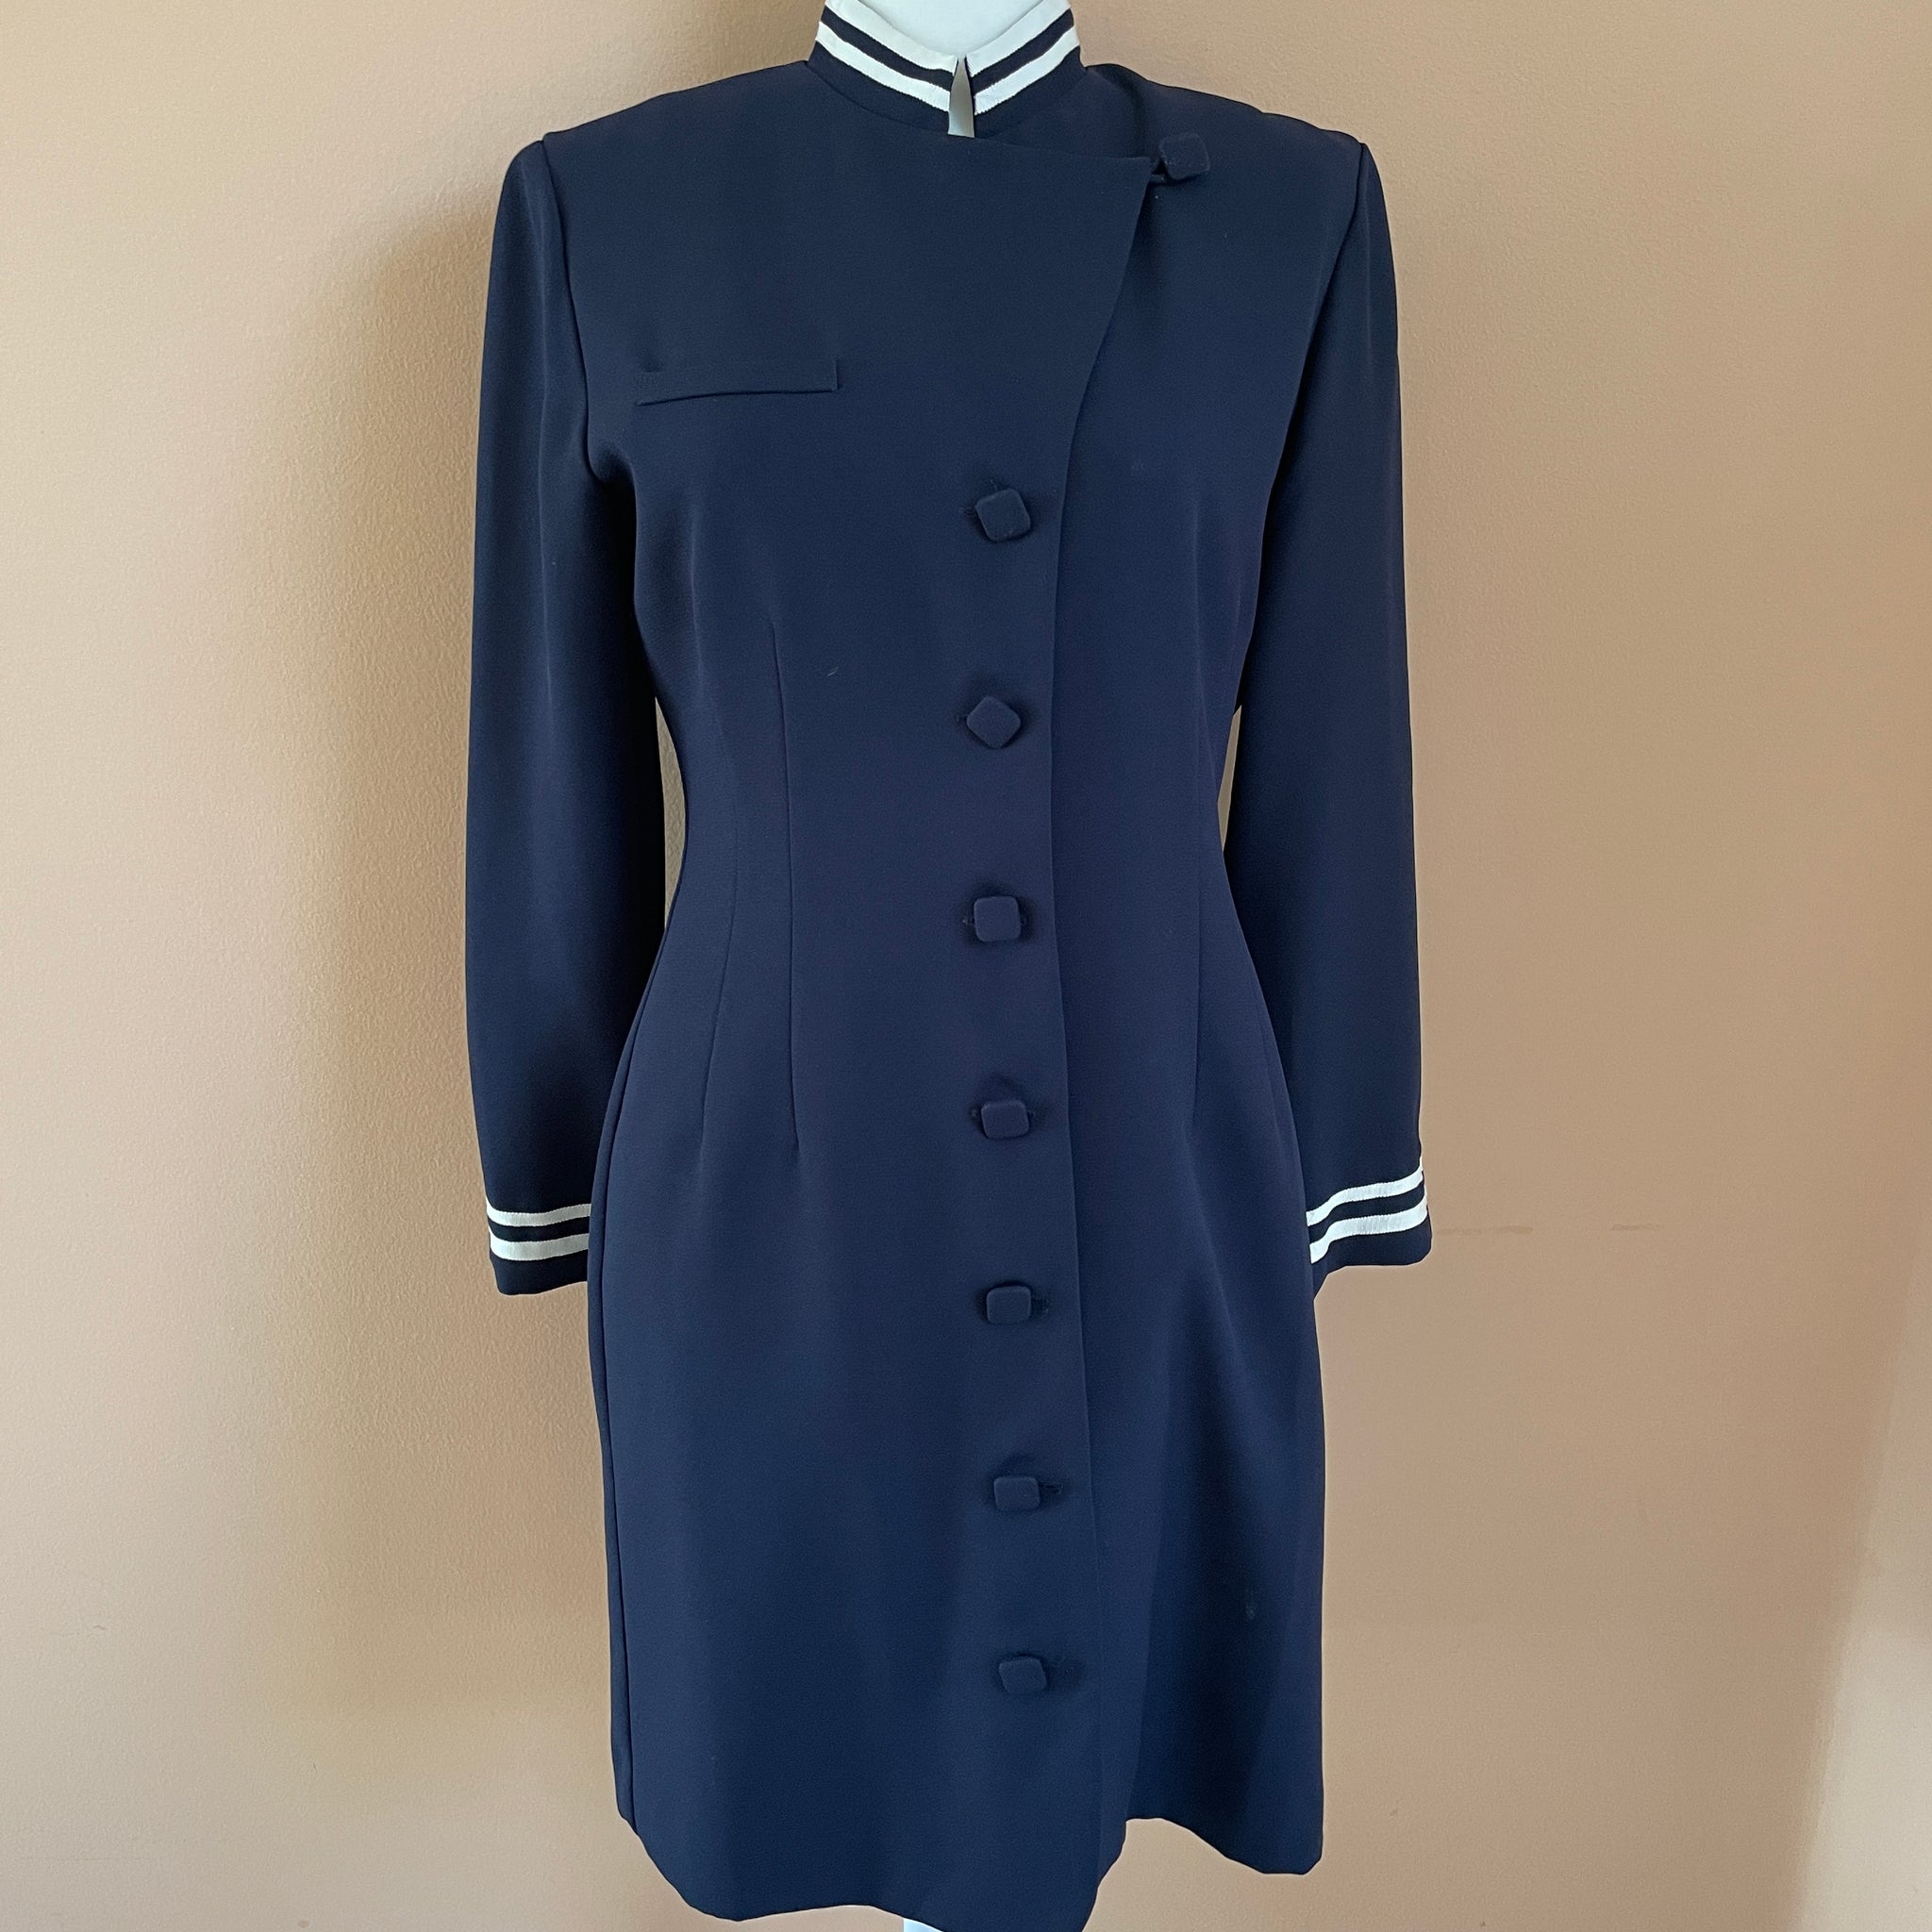 vintage 80's navy dress